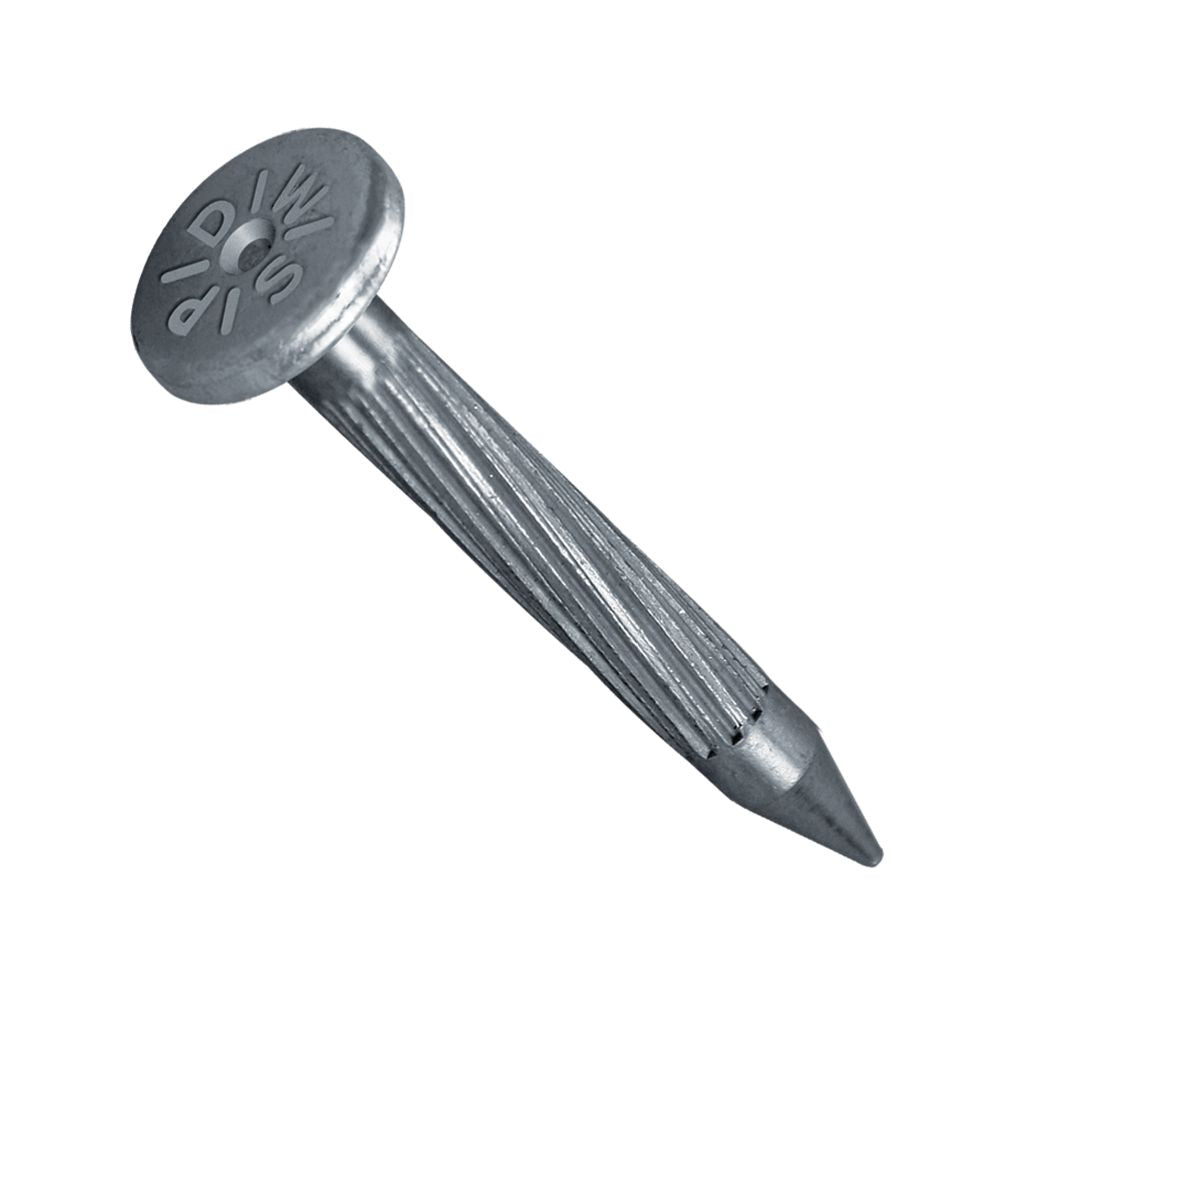 SitePro 20-754 Masonry Nail, 1-1/2-in (38.1mm)